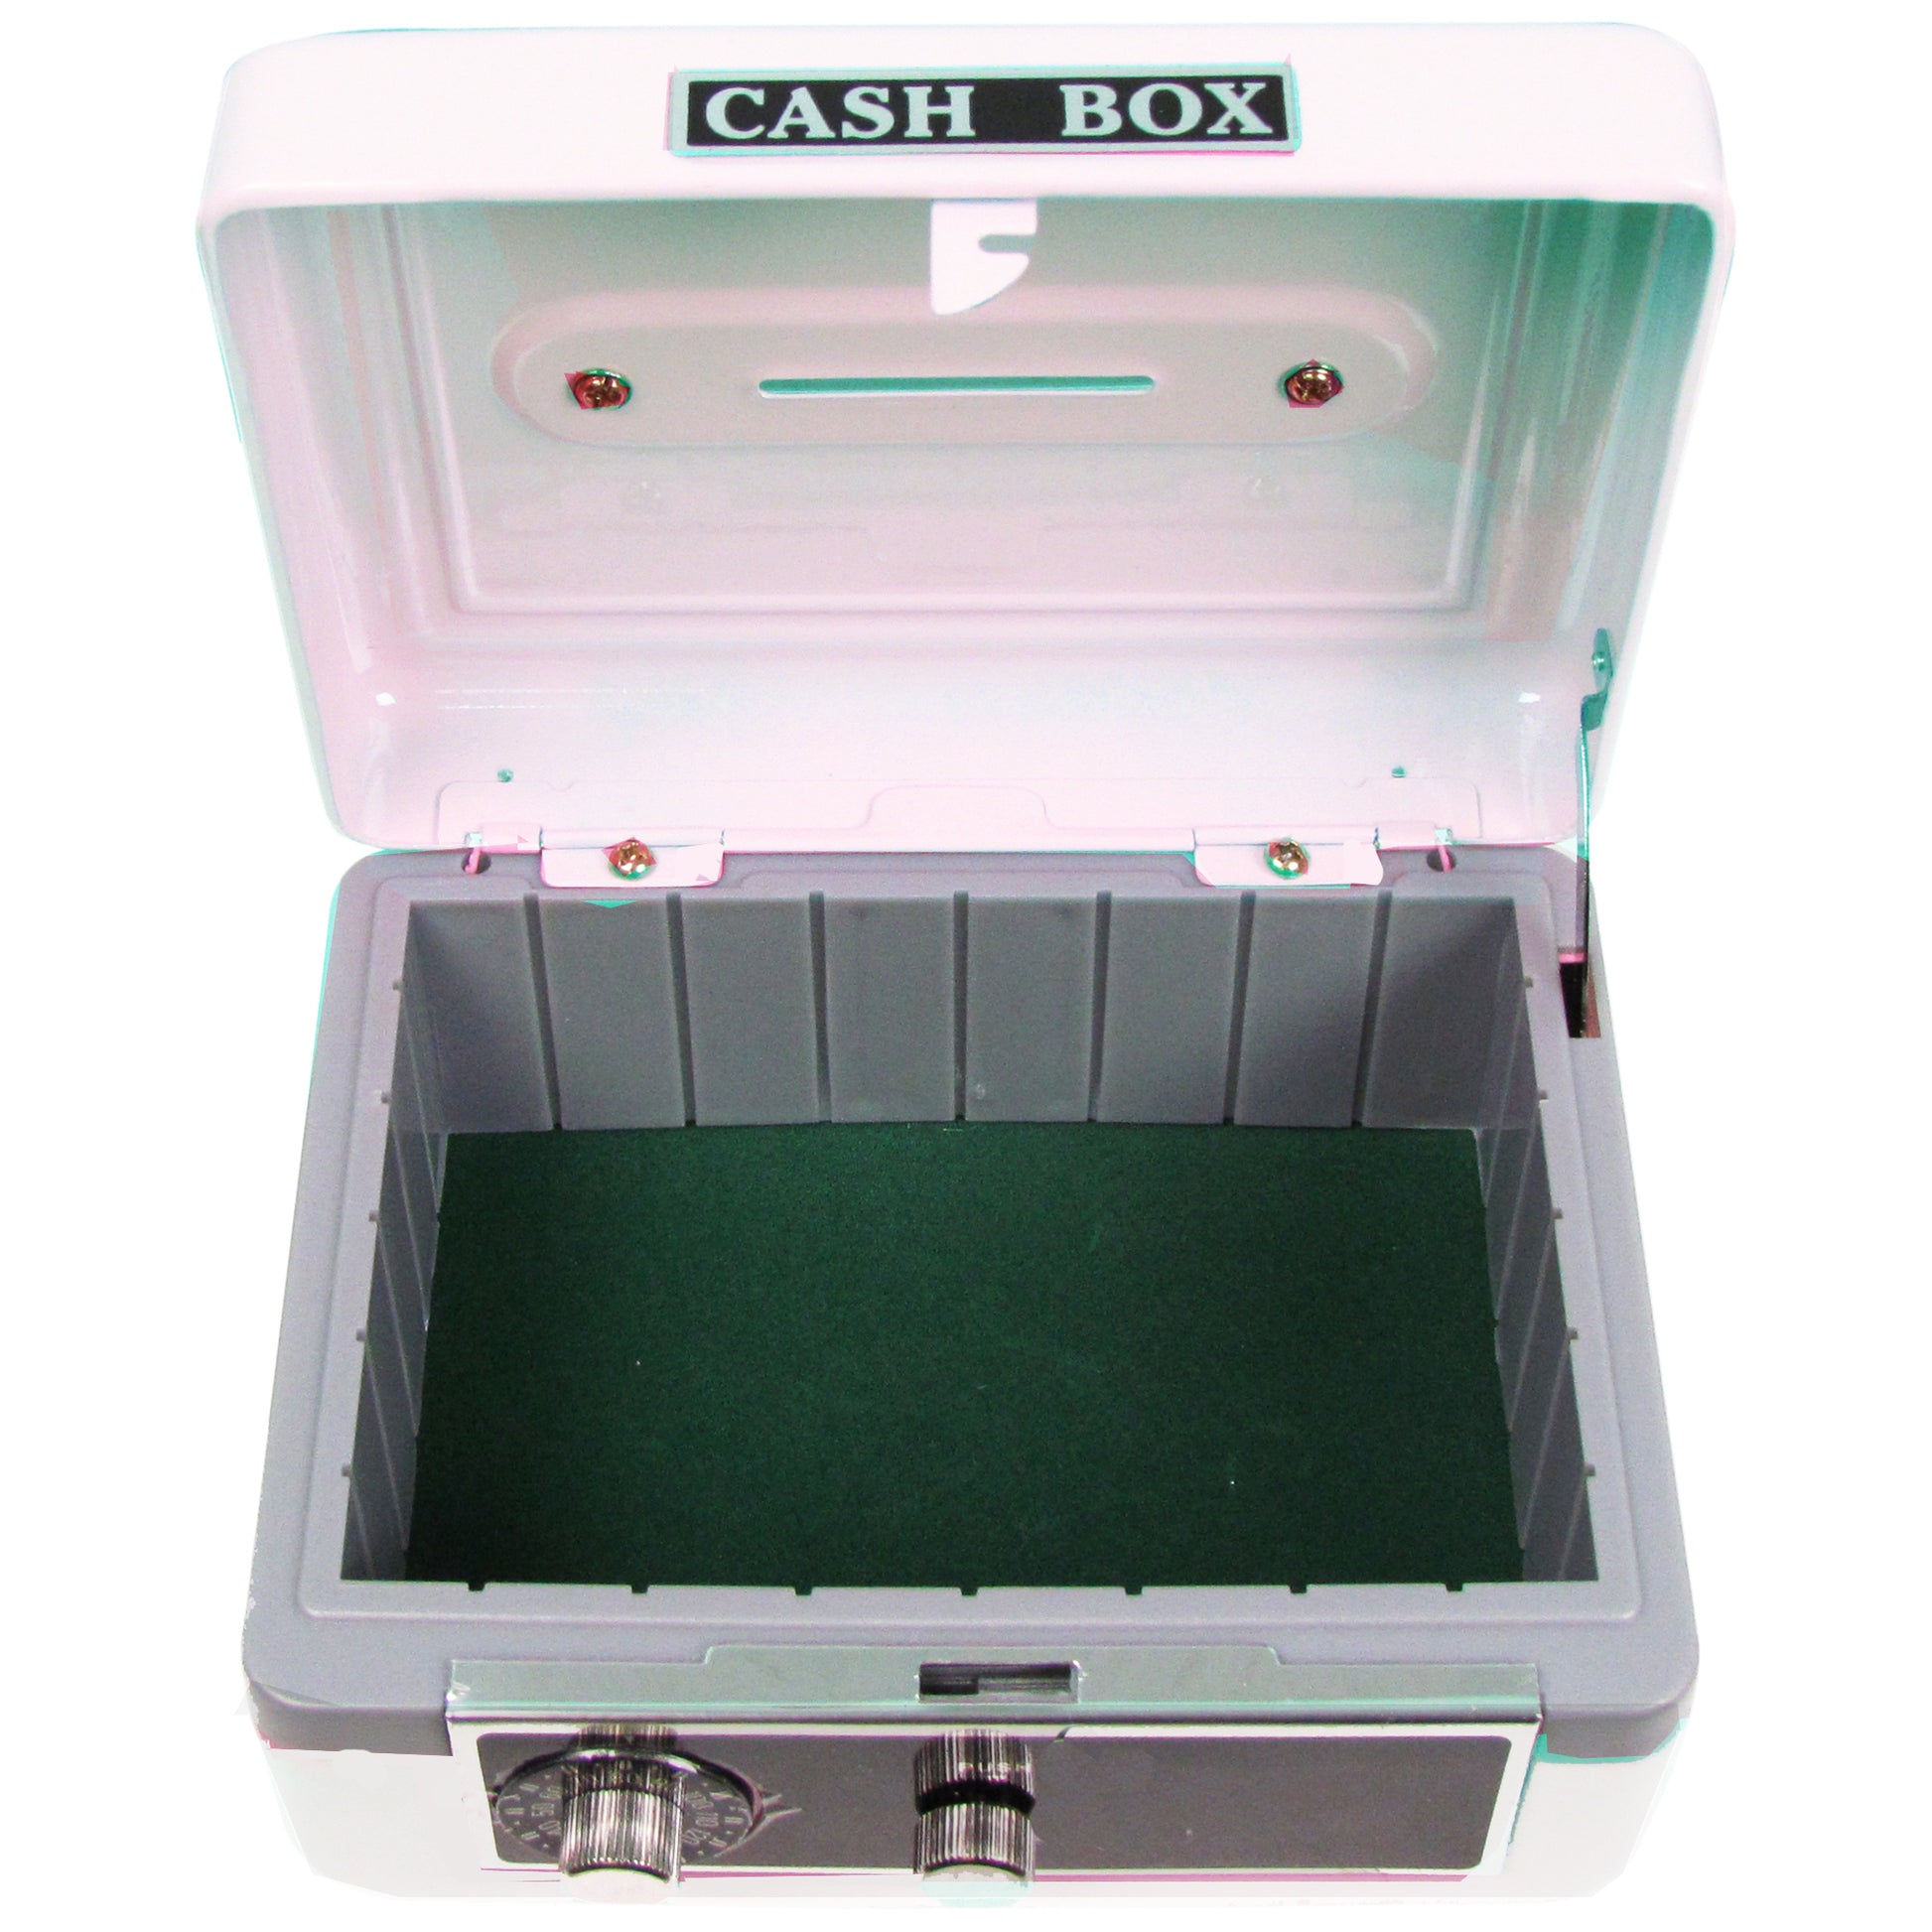 Personalized White Cash Box with Turtle design